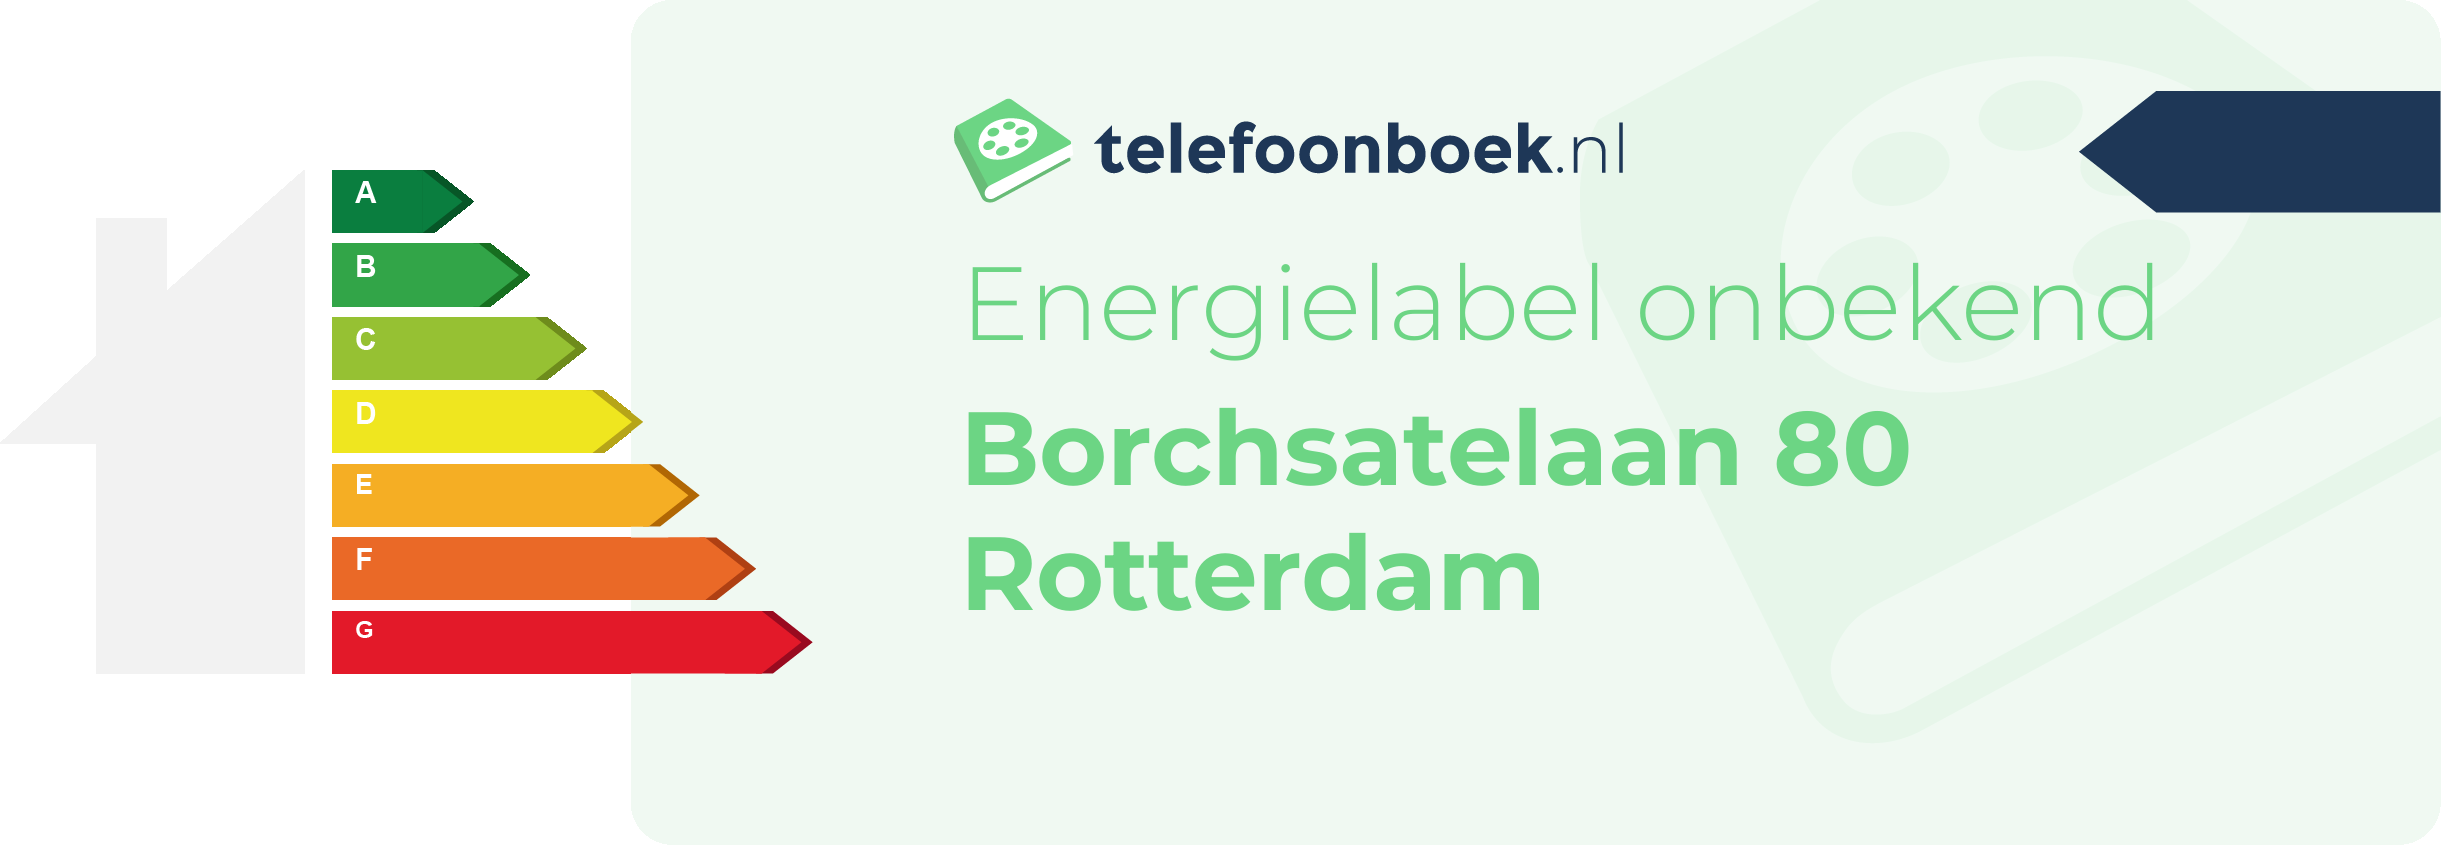 Energielabel Borchsatelaan 80 Rotterdam